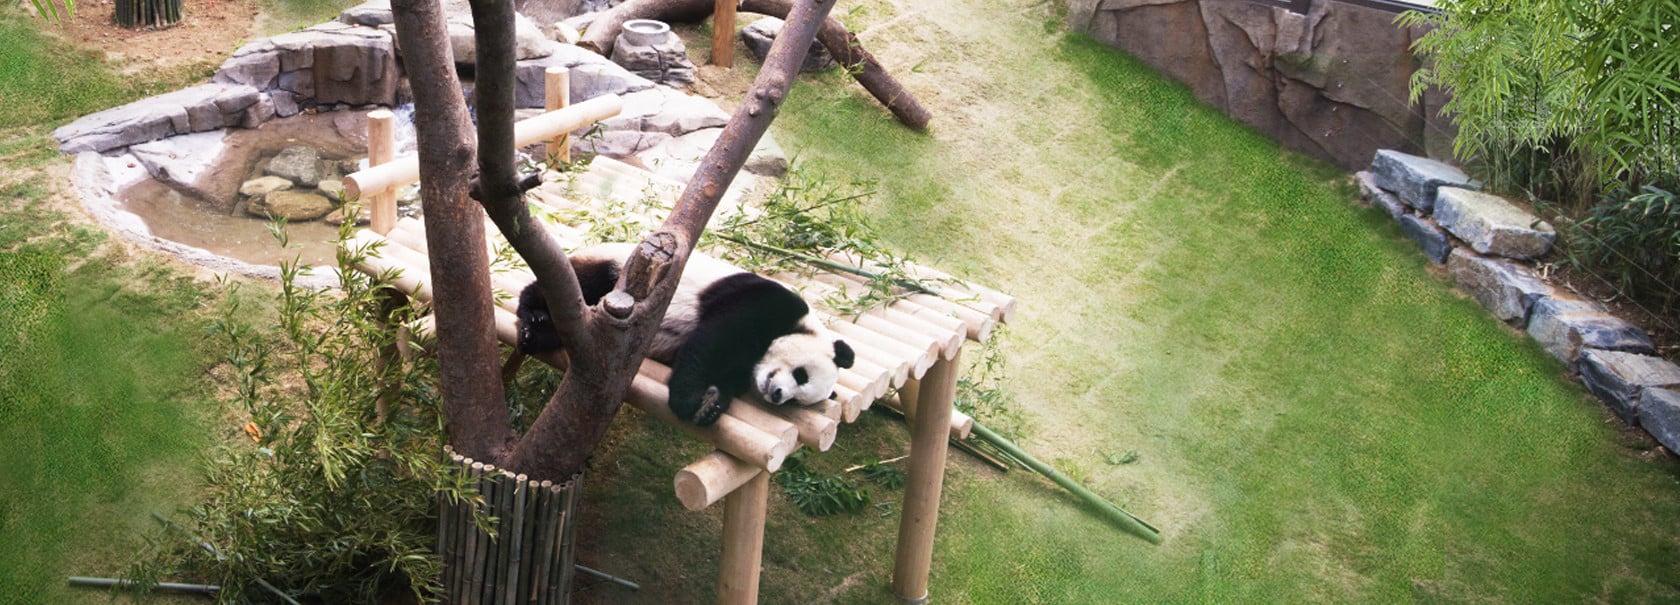 Everland Resort celebrates Panda Worlds’s opening